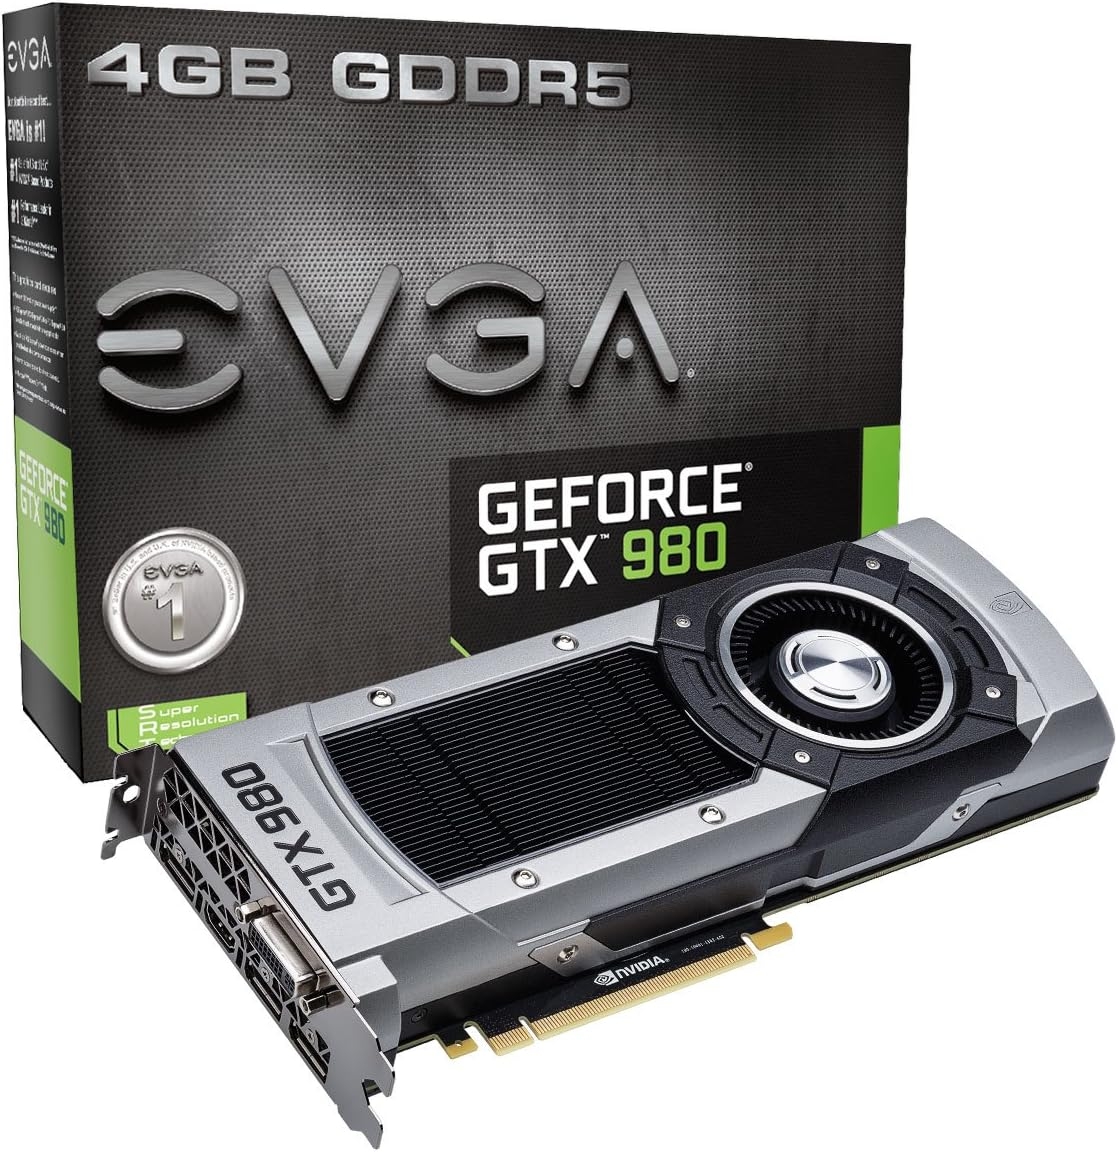 EVGA GeForce GTX 980 4GB GAMING,Silent Cooling Graphics Card 04G-P4-2980-KR   price checker   price checker Description